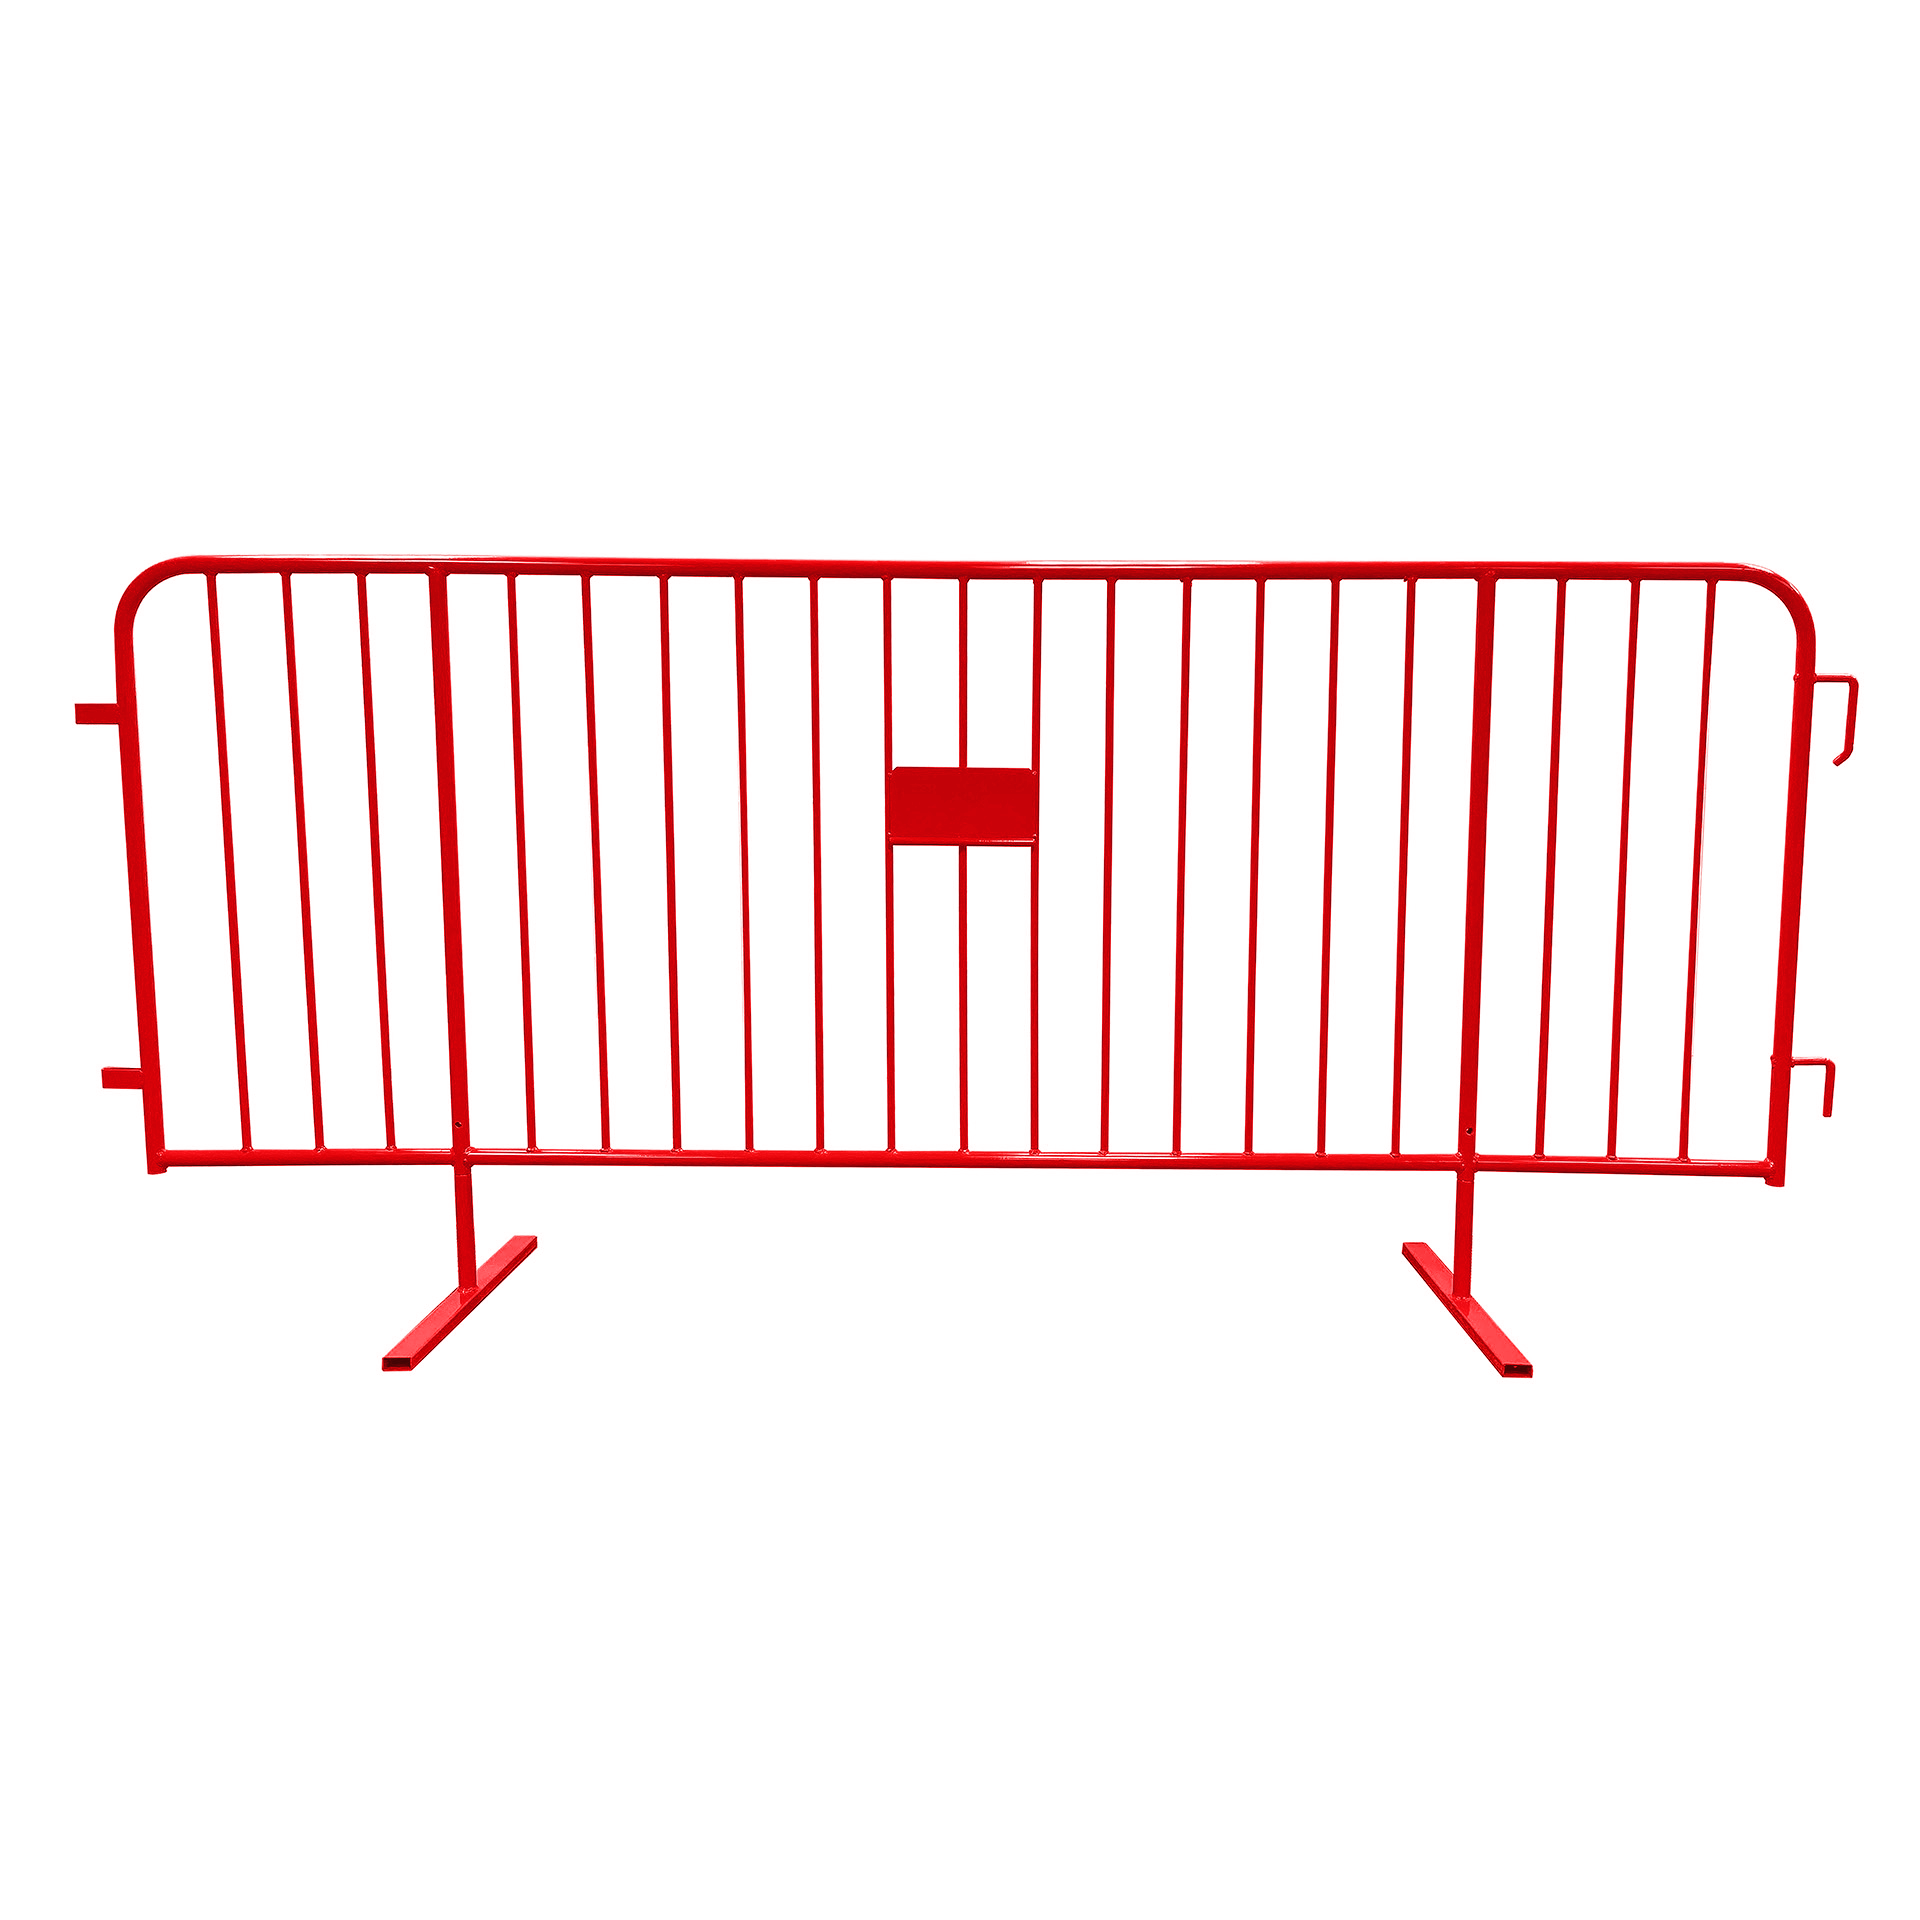 Red 1 inch barricade